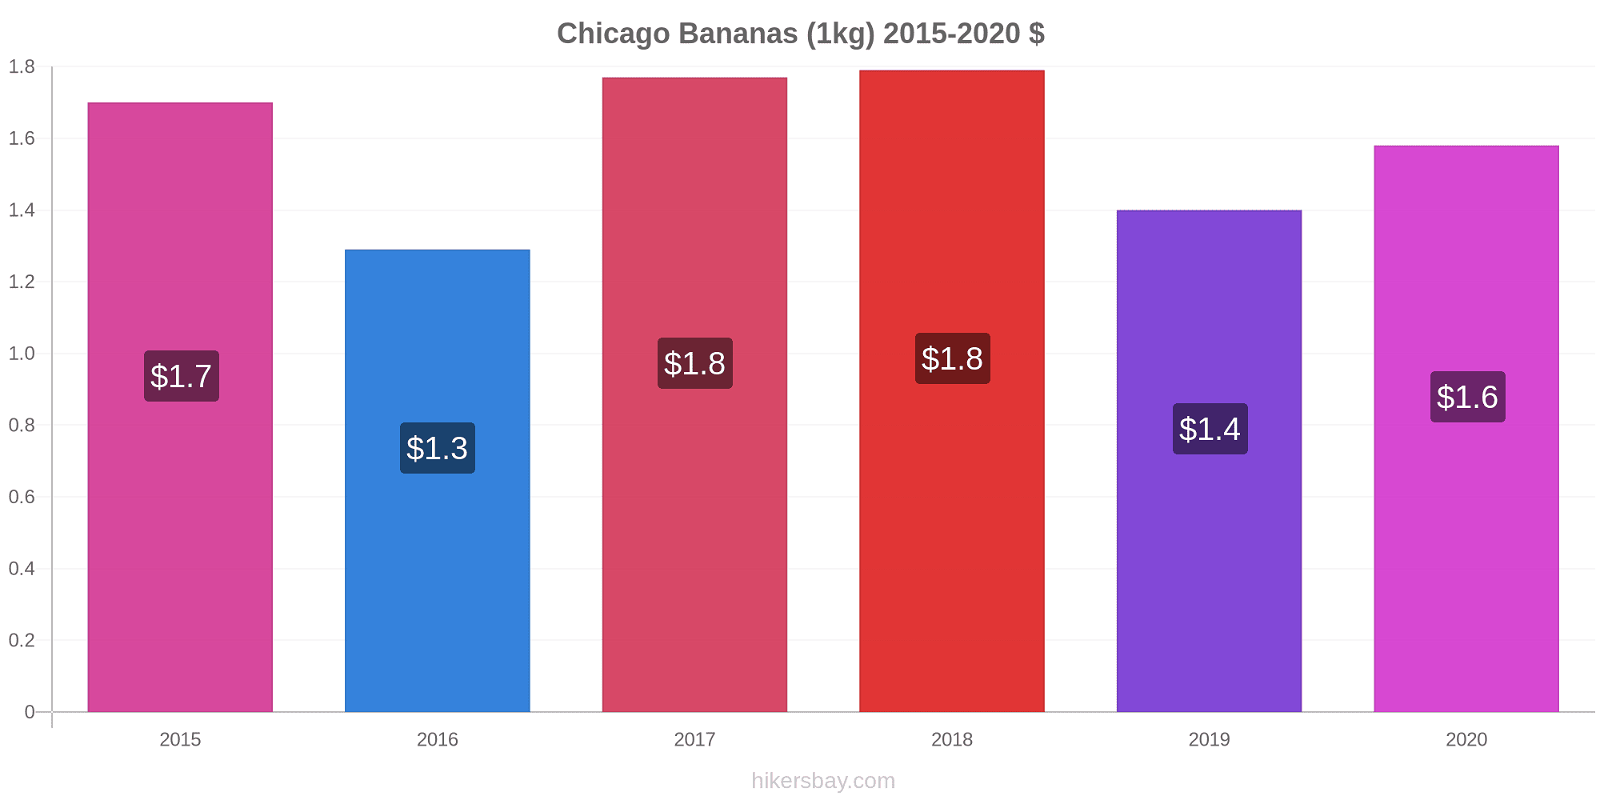 Chicago price changes Bananas (1kg) hikersbay.com